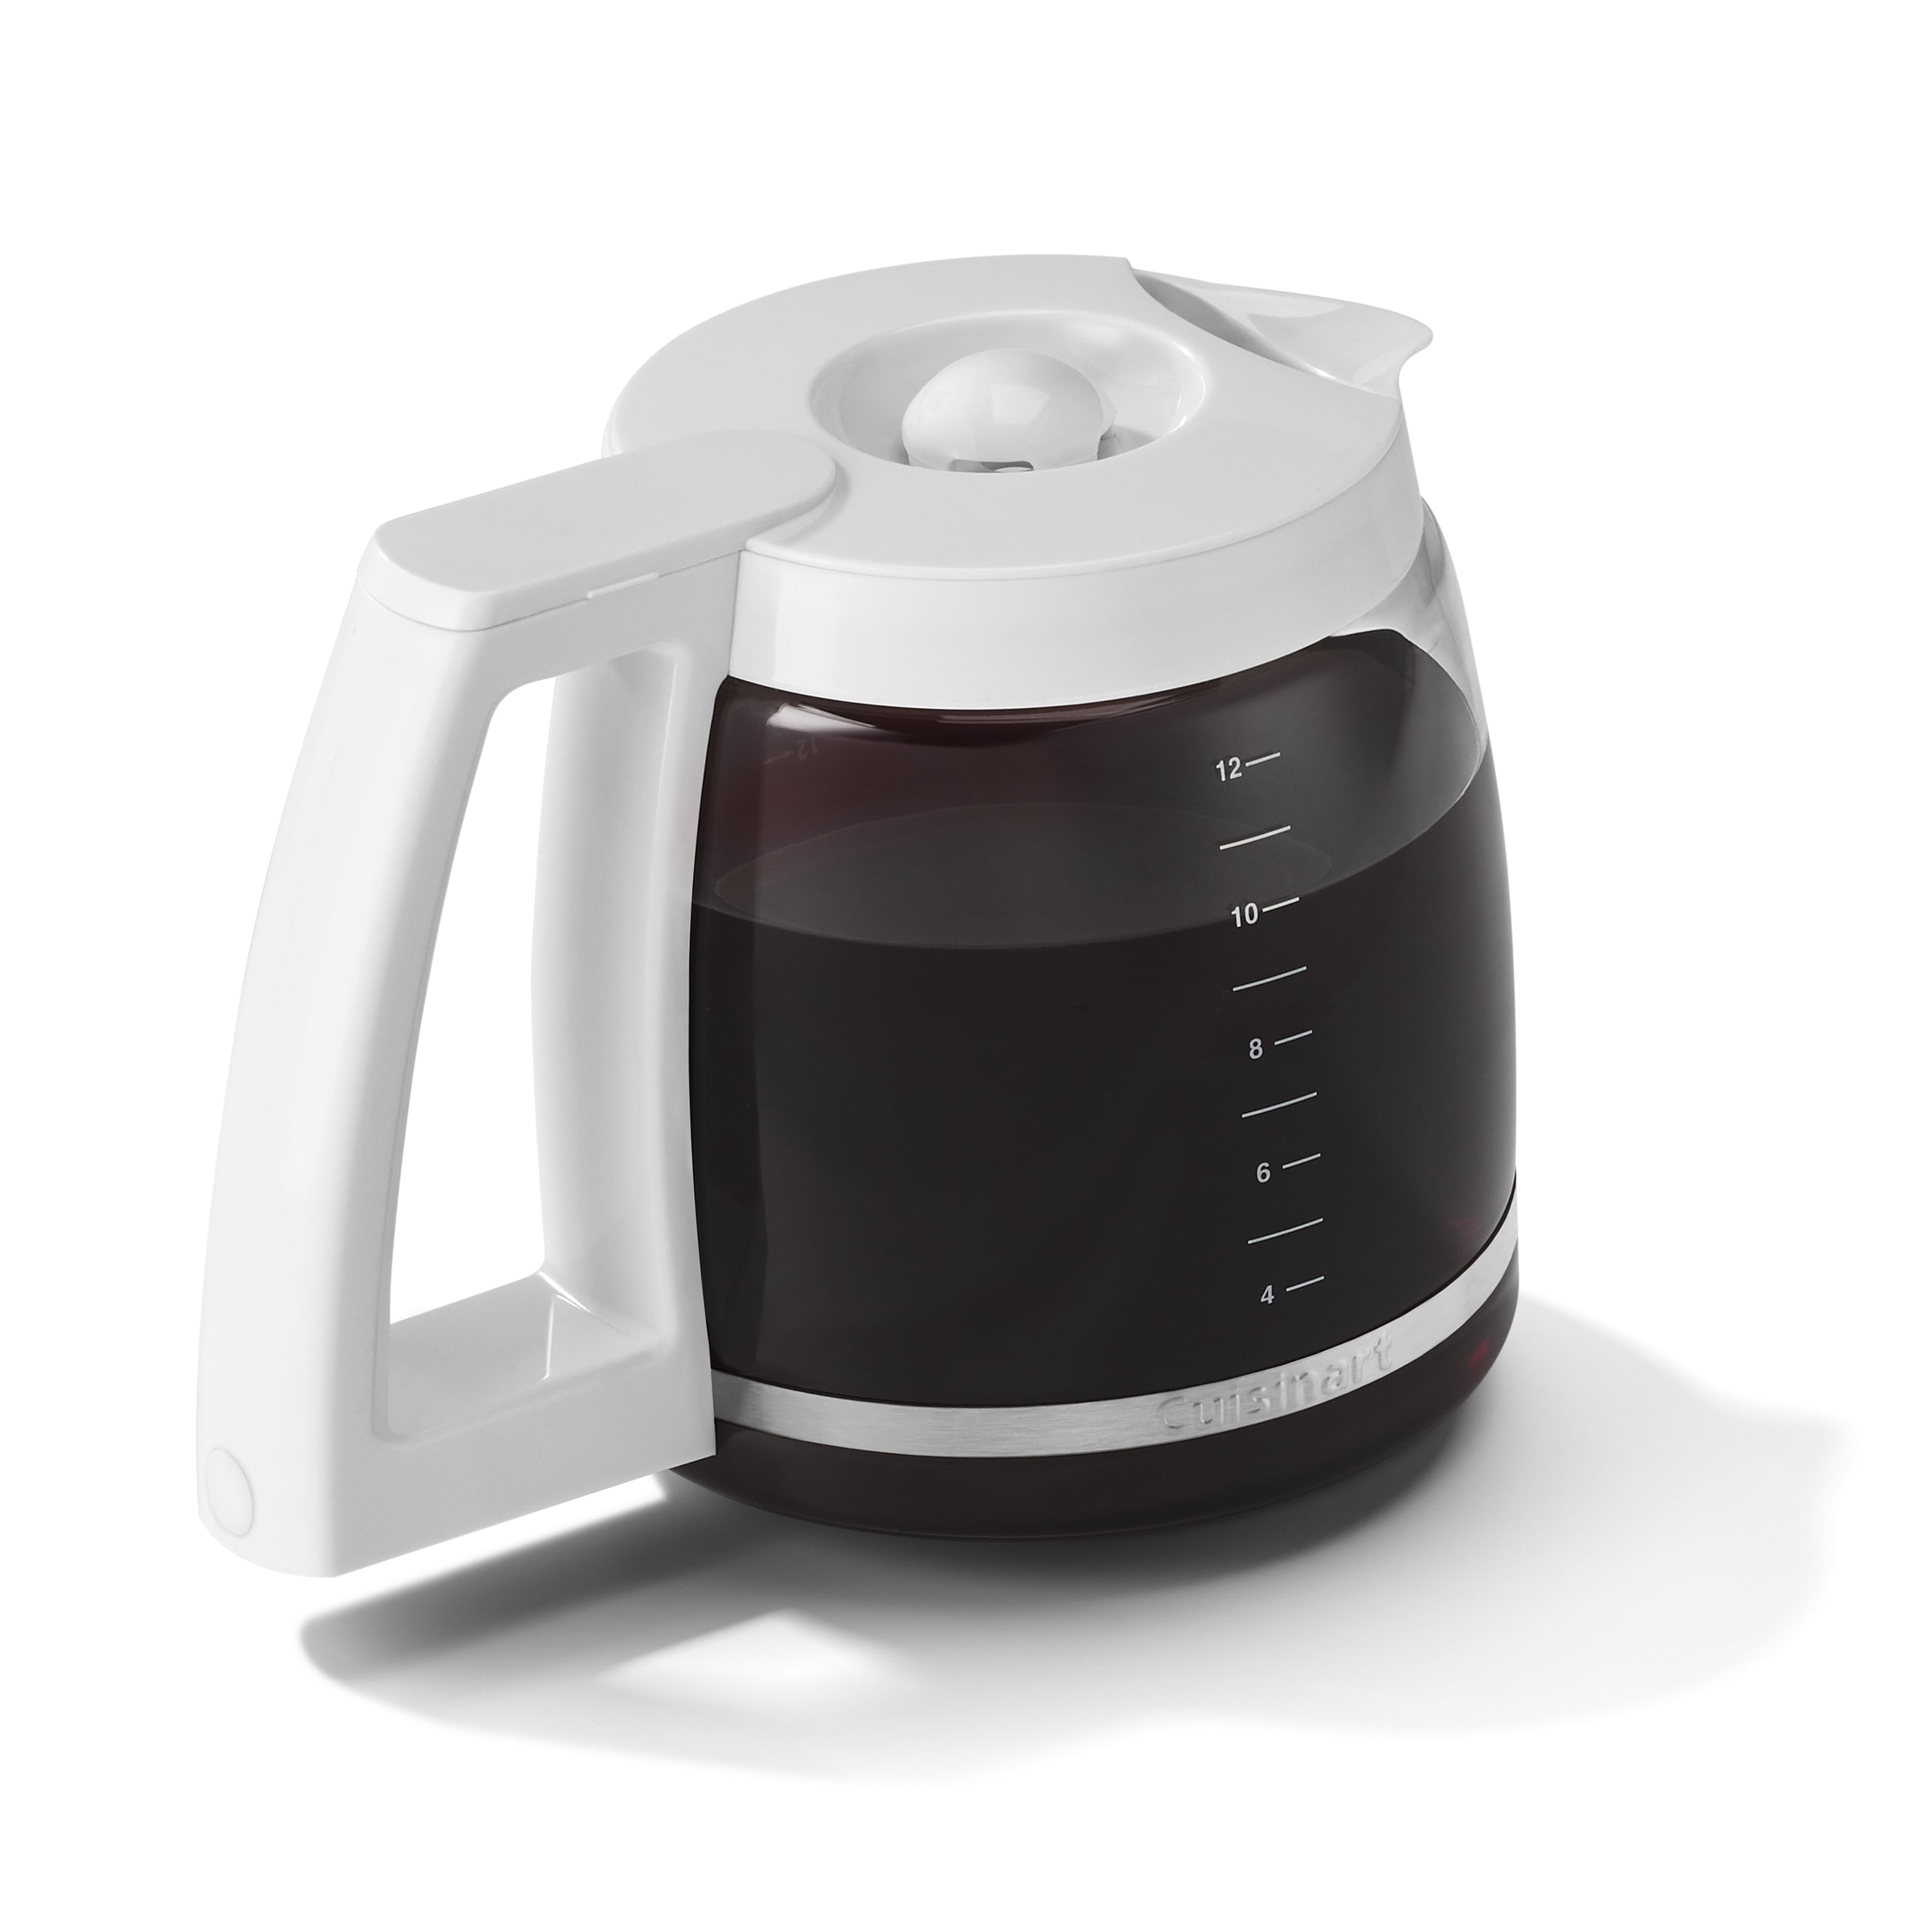 Cuisinart 12 Cup Programmable Thermal Coffeemaker, Silver, Coffee Maker,  Kitchen Appliance - AliExpress